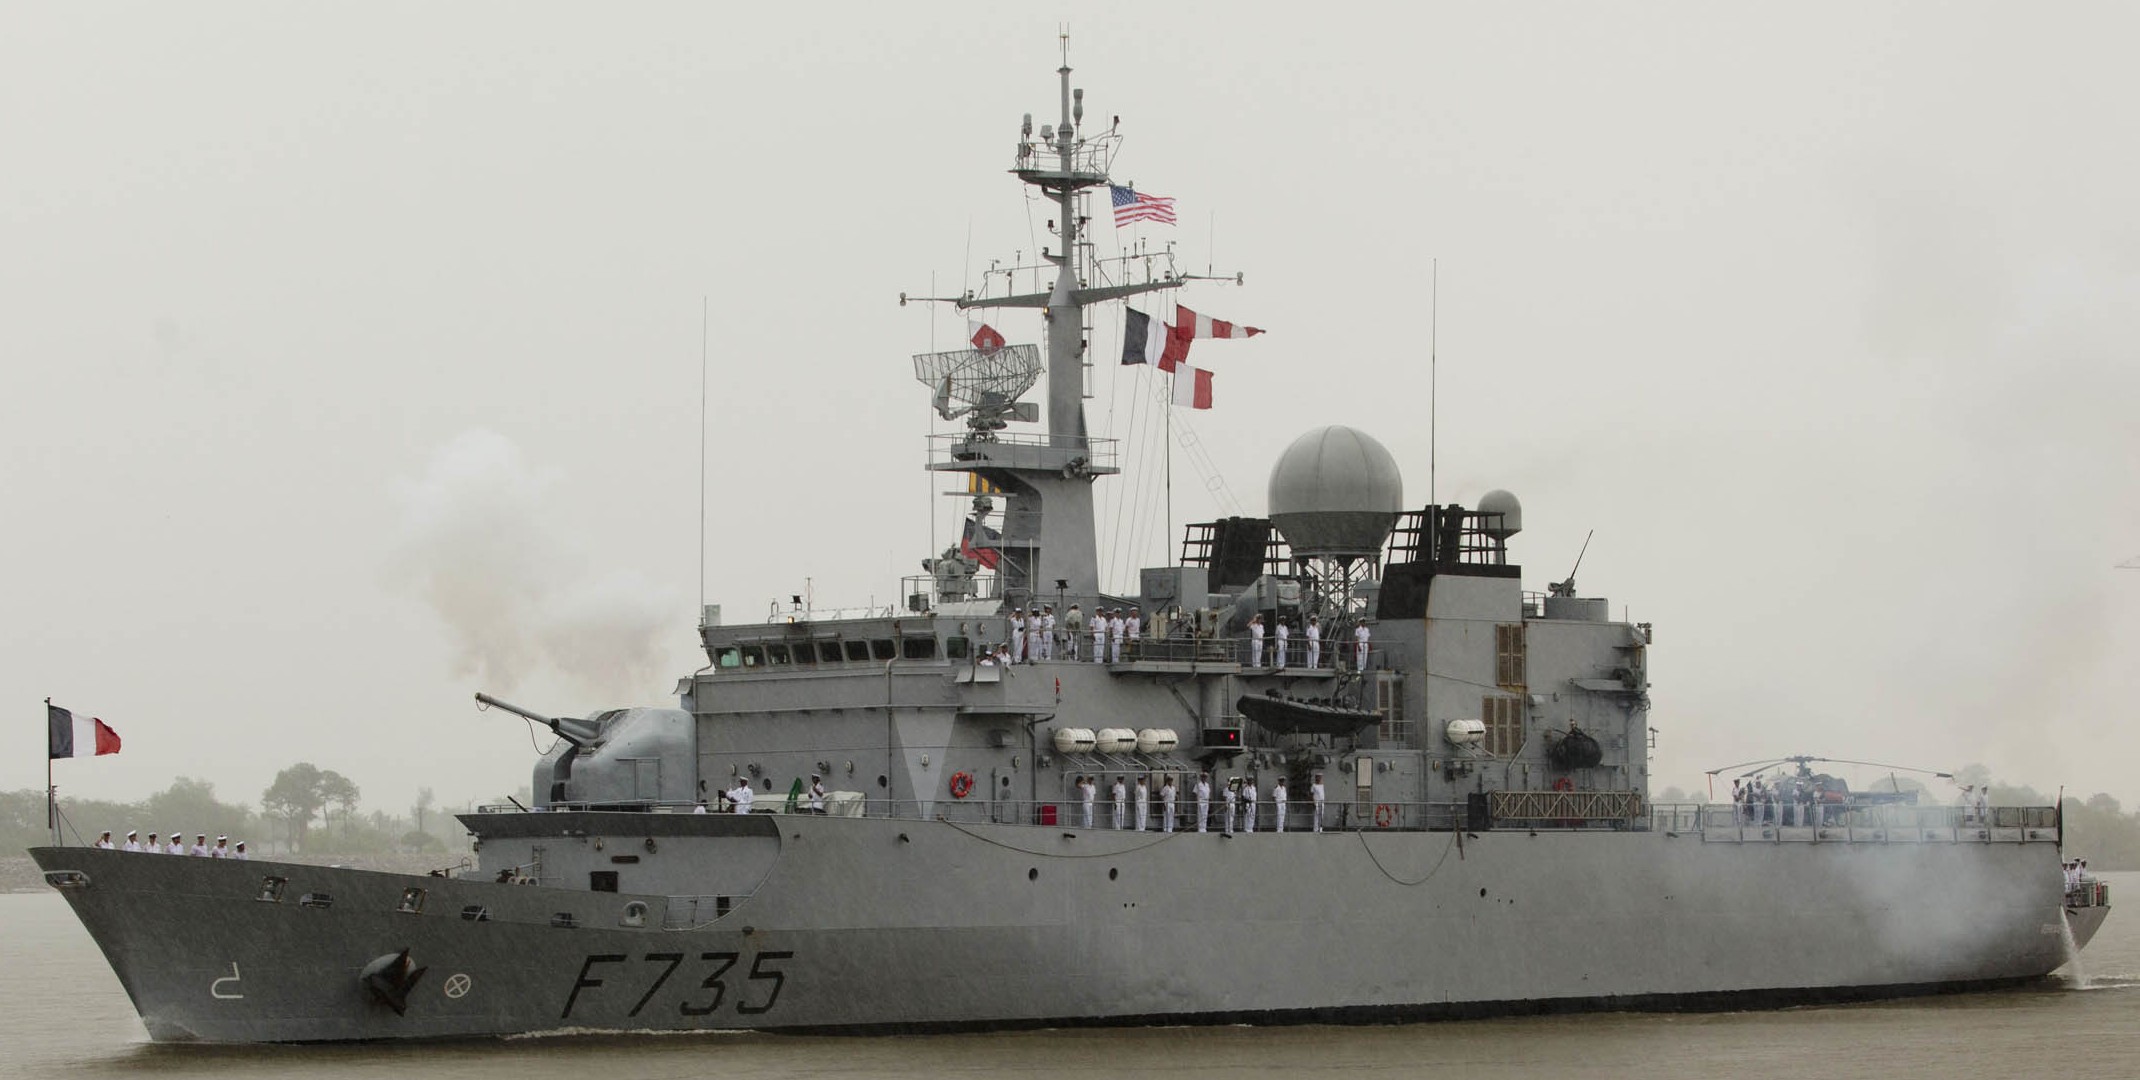 f-735 fs germinal floreal class frigate french navy marine nationale fregate de surveillance 06